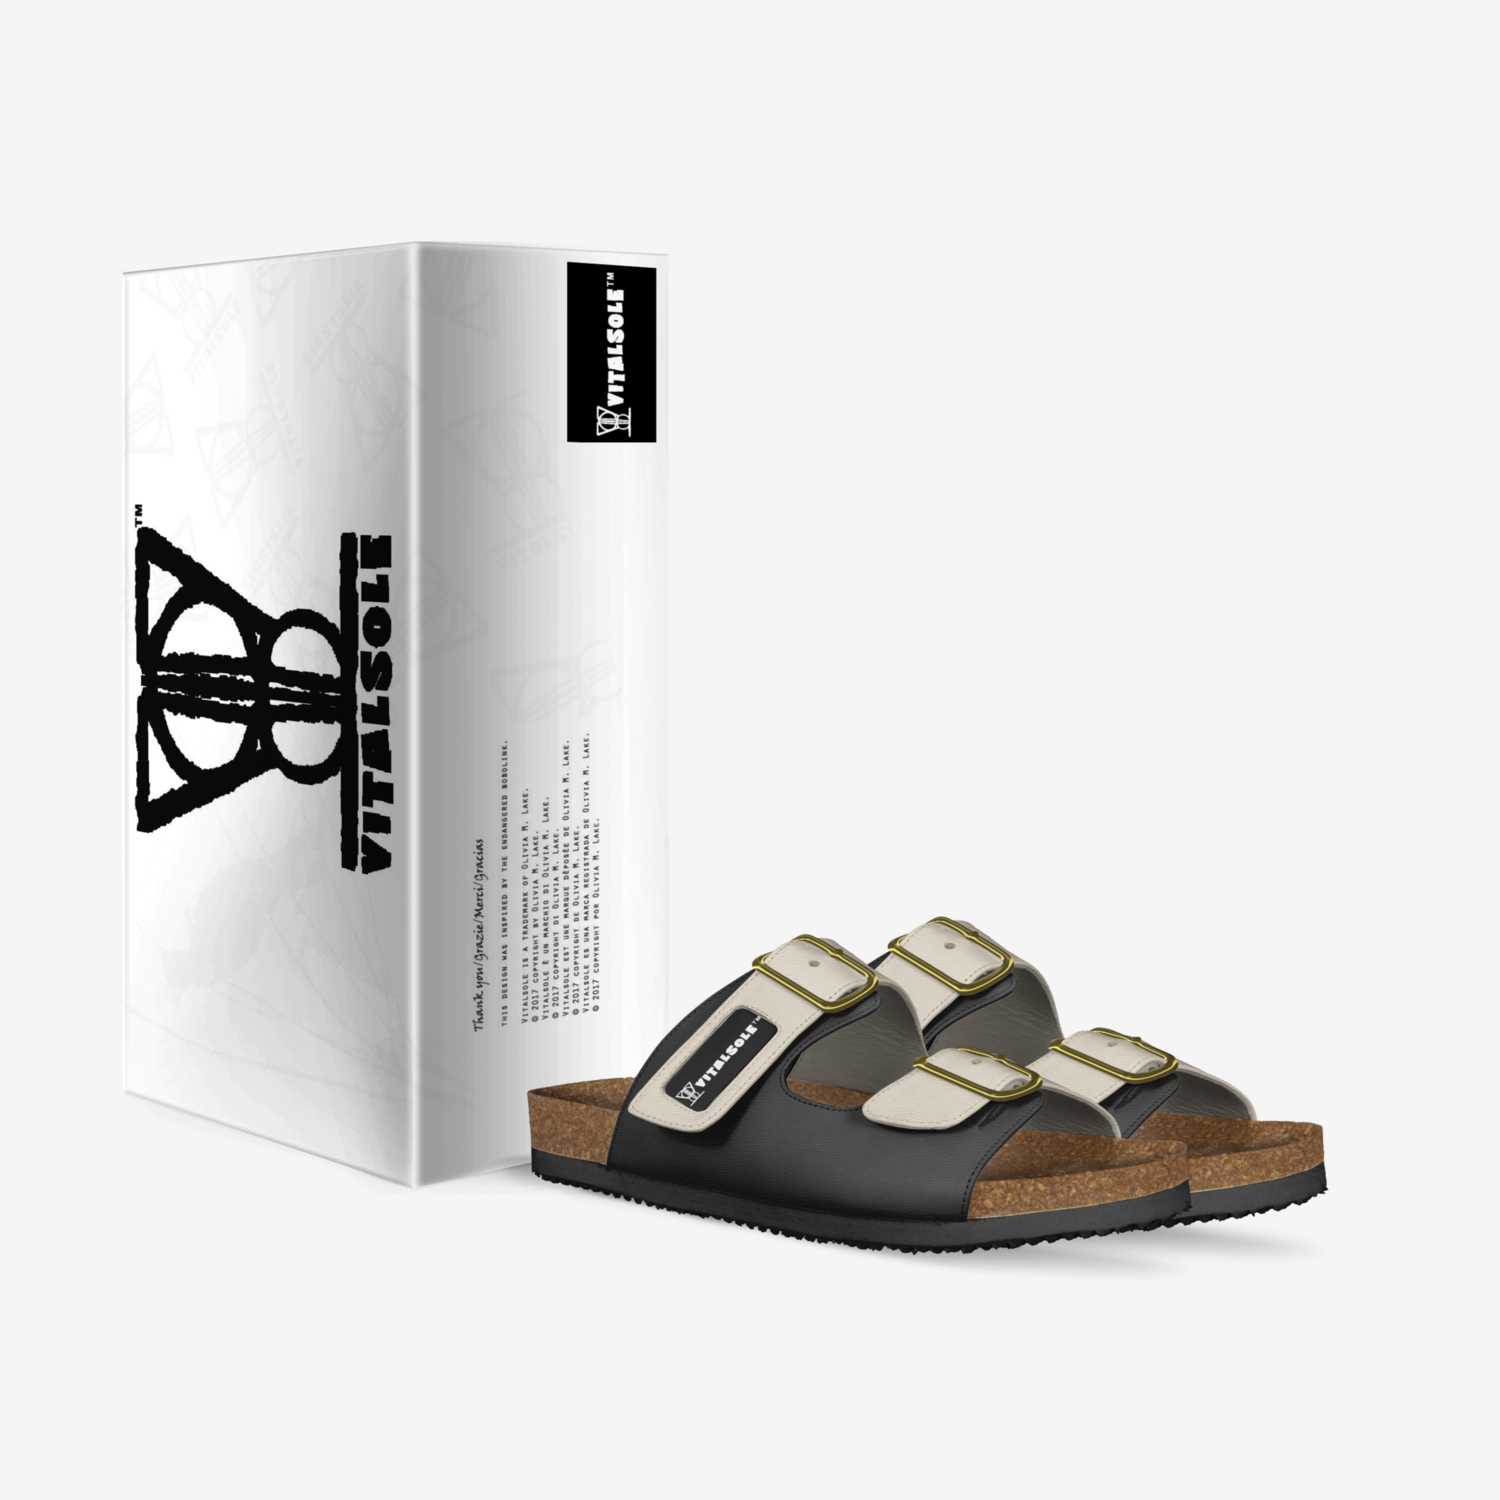 Bobos custom made in Italy shoes by Olivia Lake | Box view